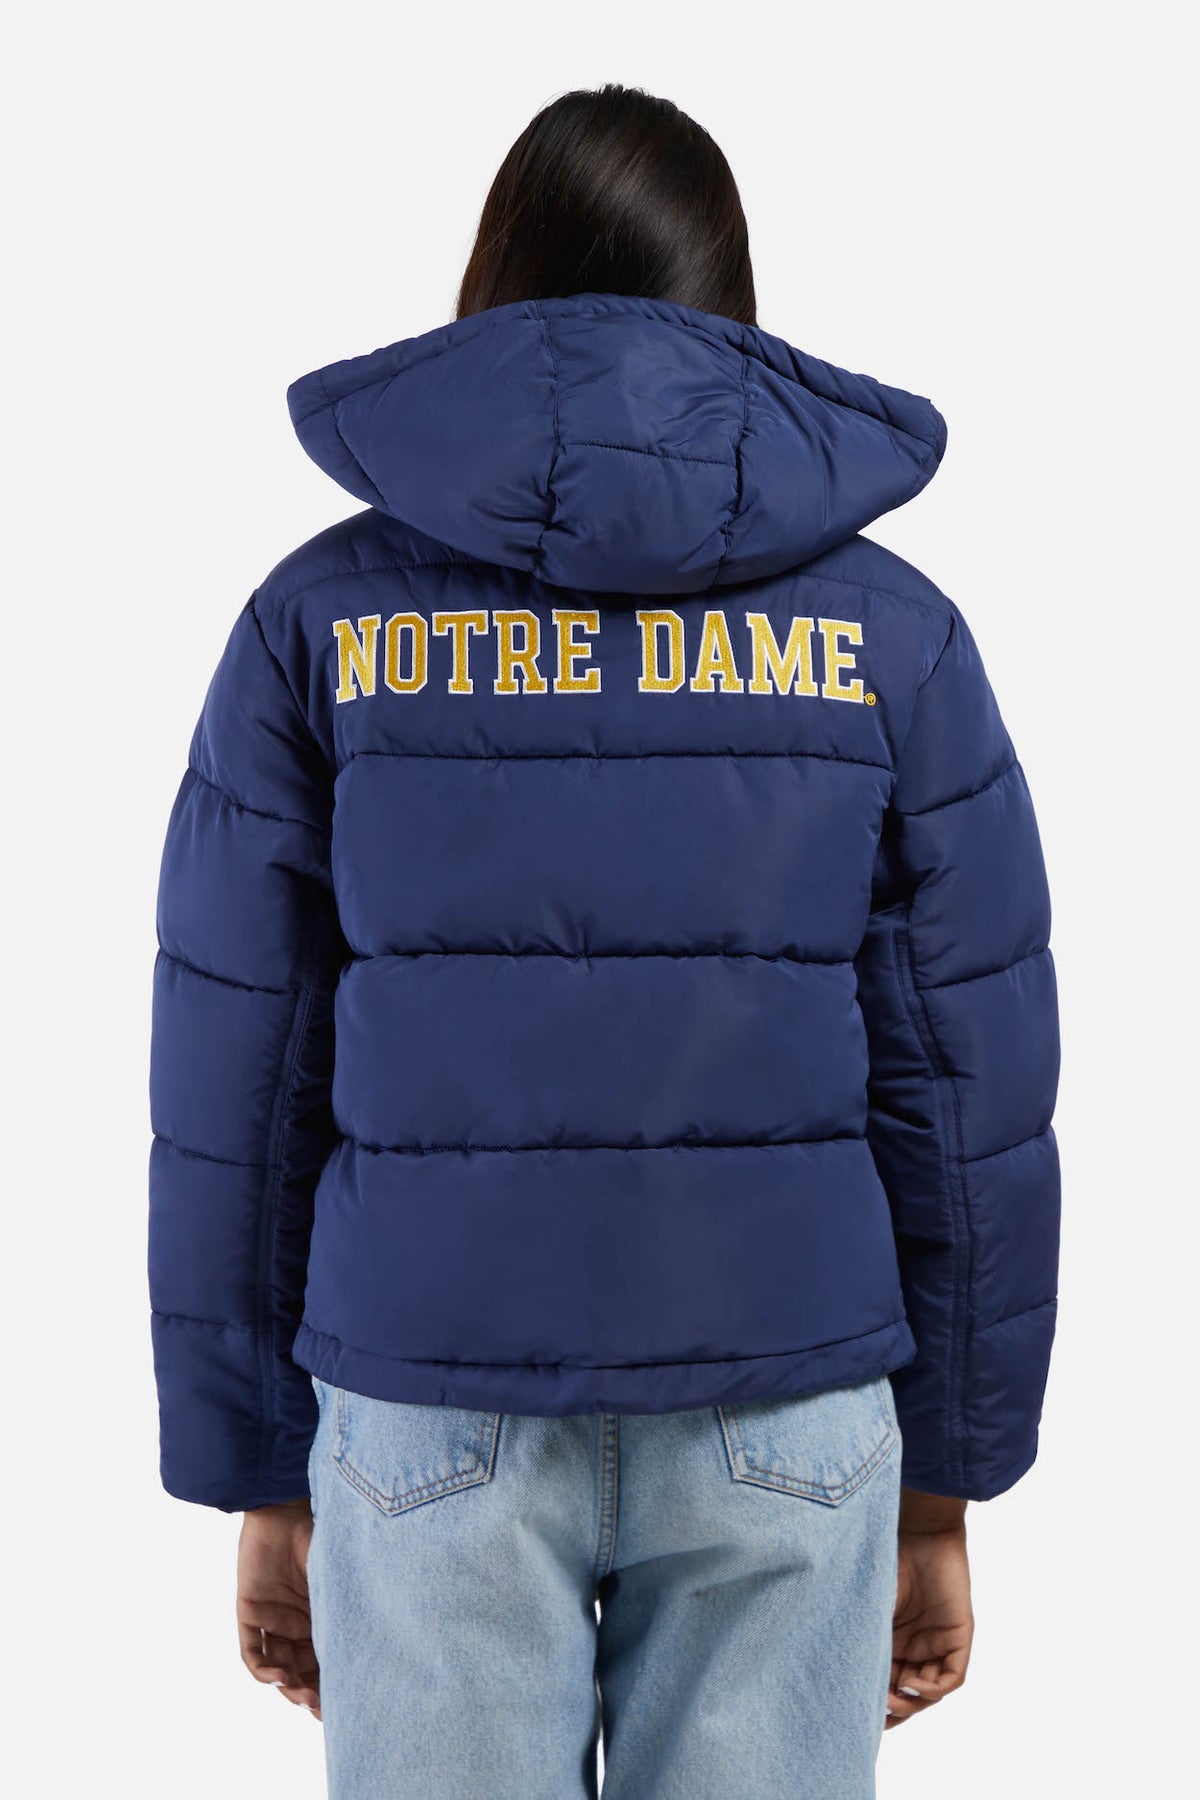 Notre Dame Puffer Jacket